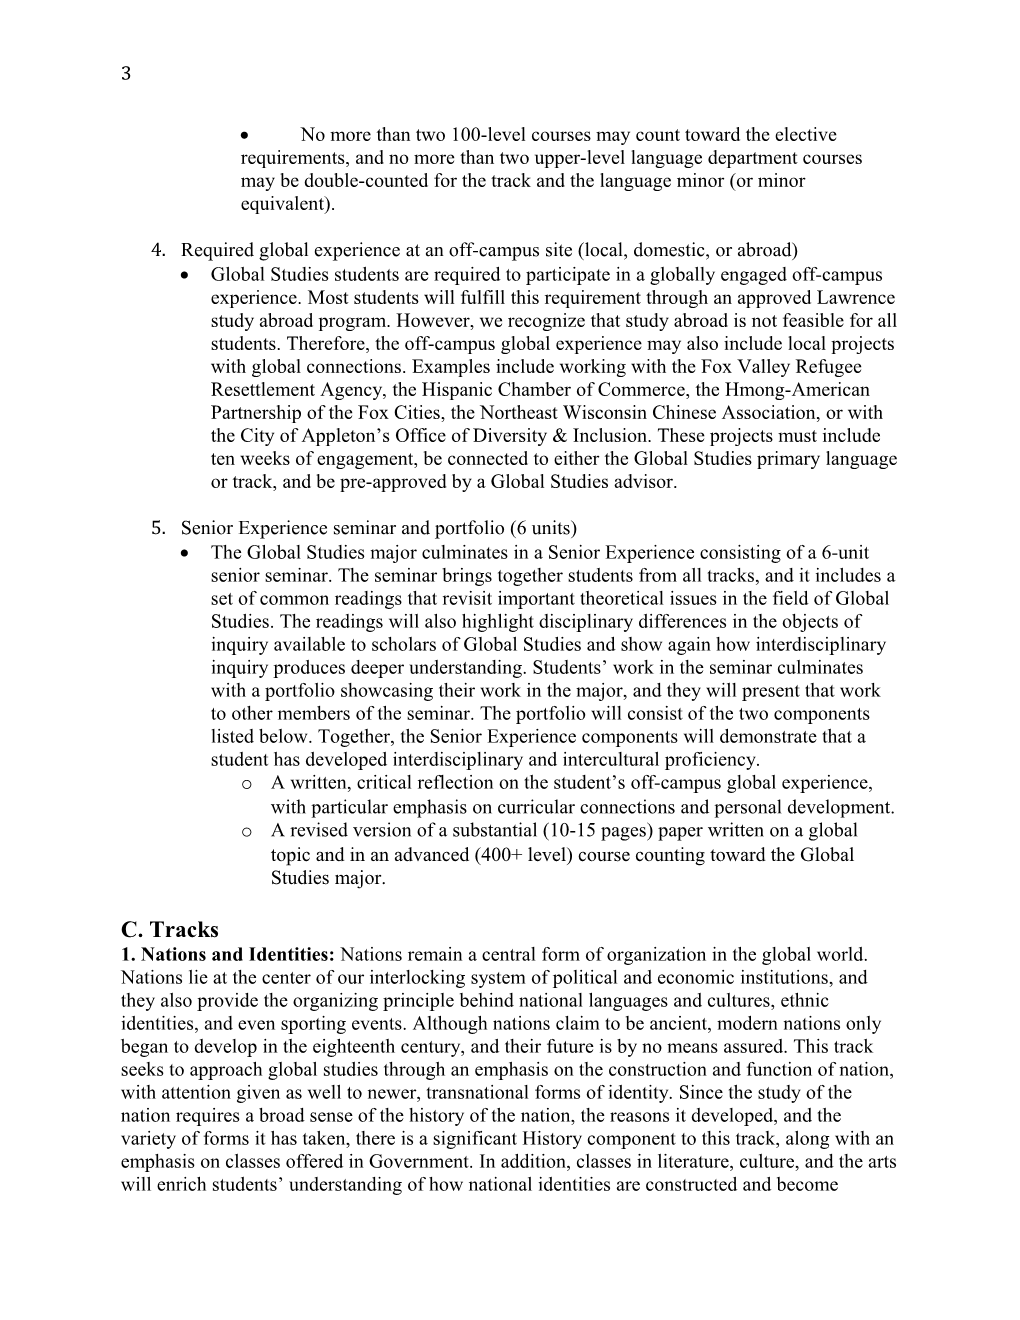 Proposal for Global Studies Major at Lawrence University